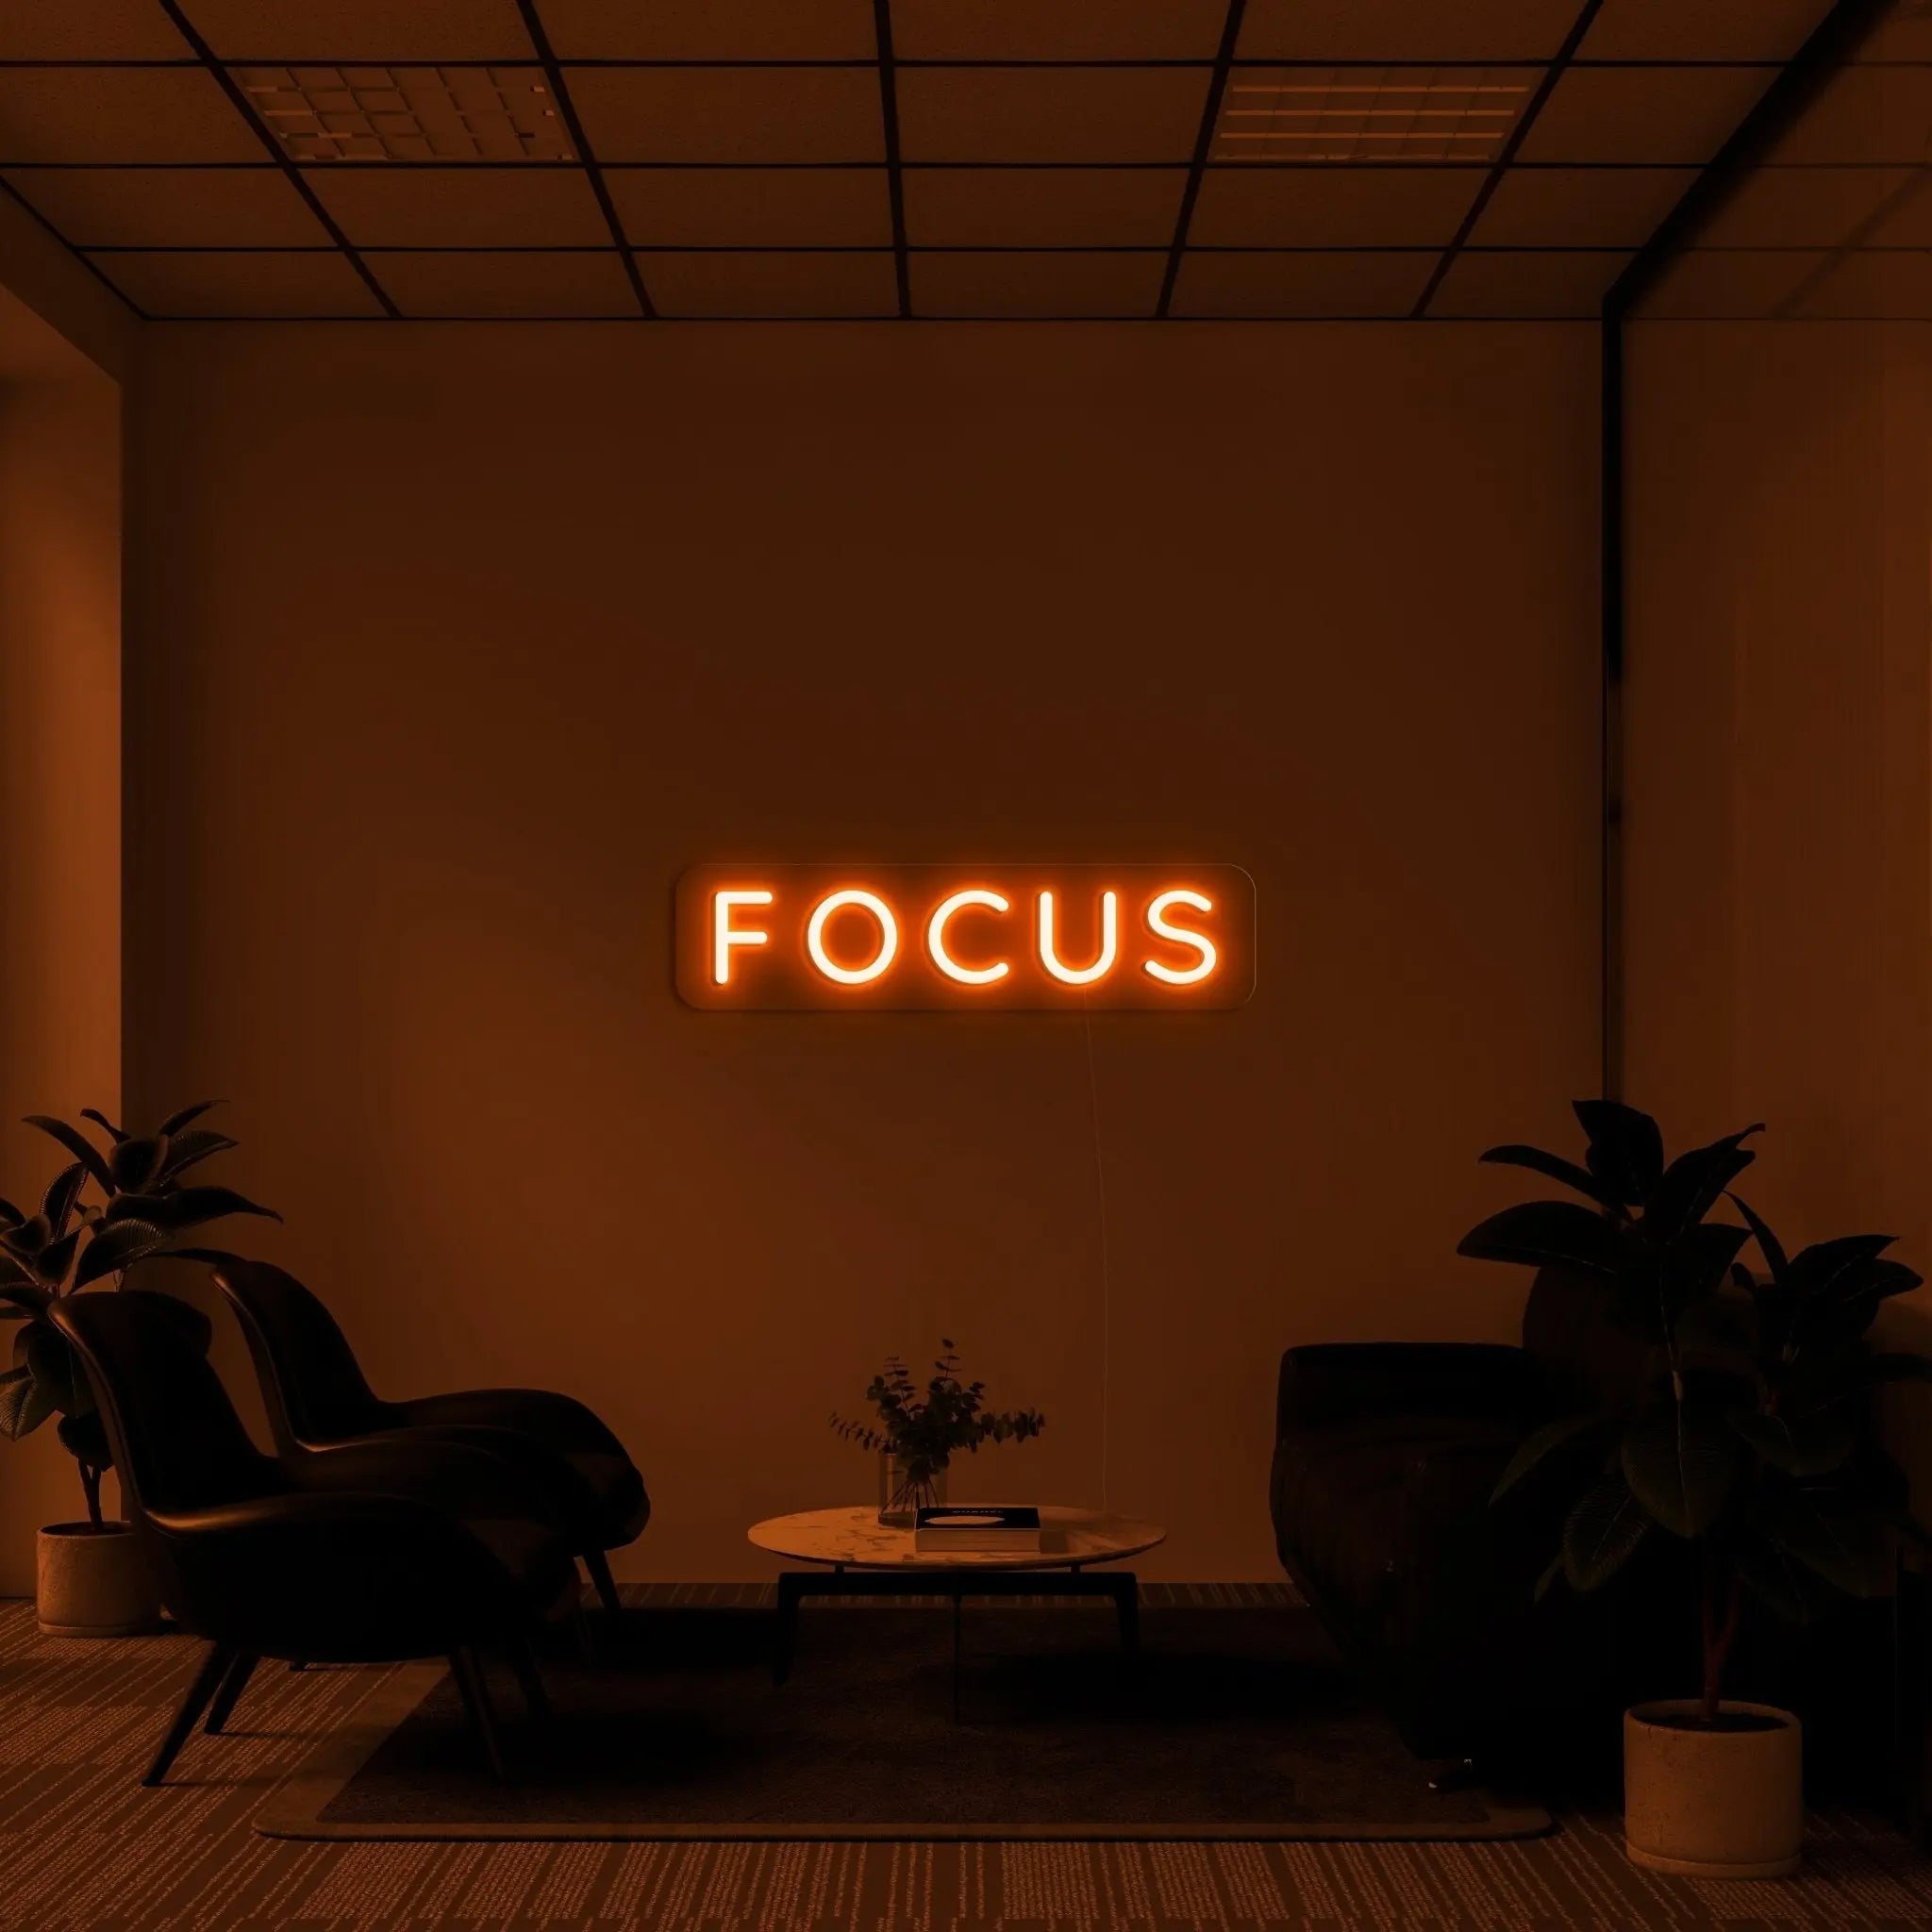 'FOCUS' Neon Sign - neonaffair